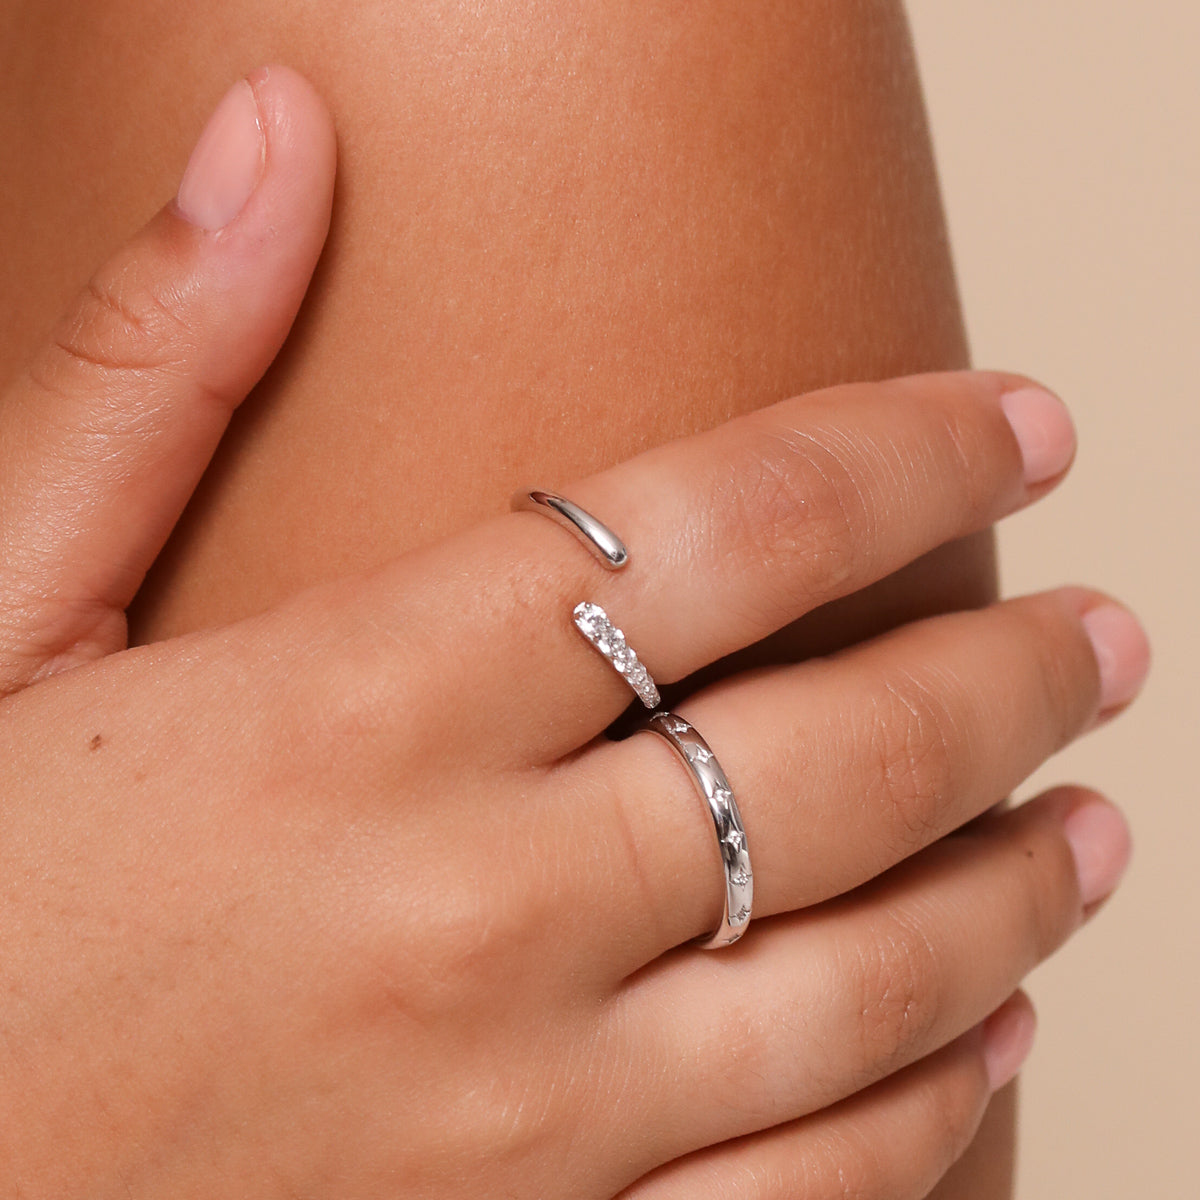 Orbit Crystal Ring in Silver worn